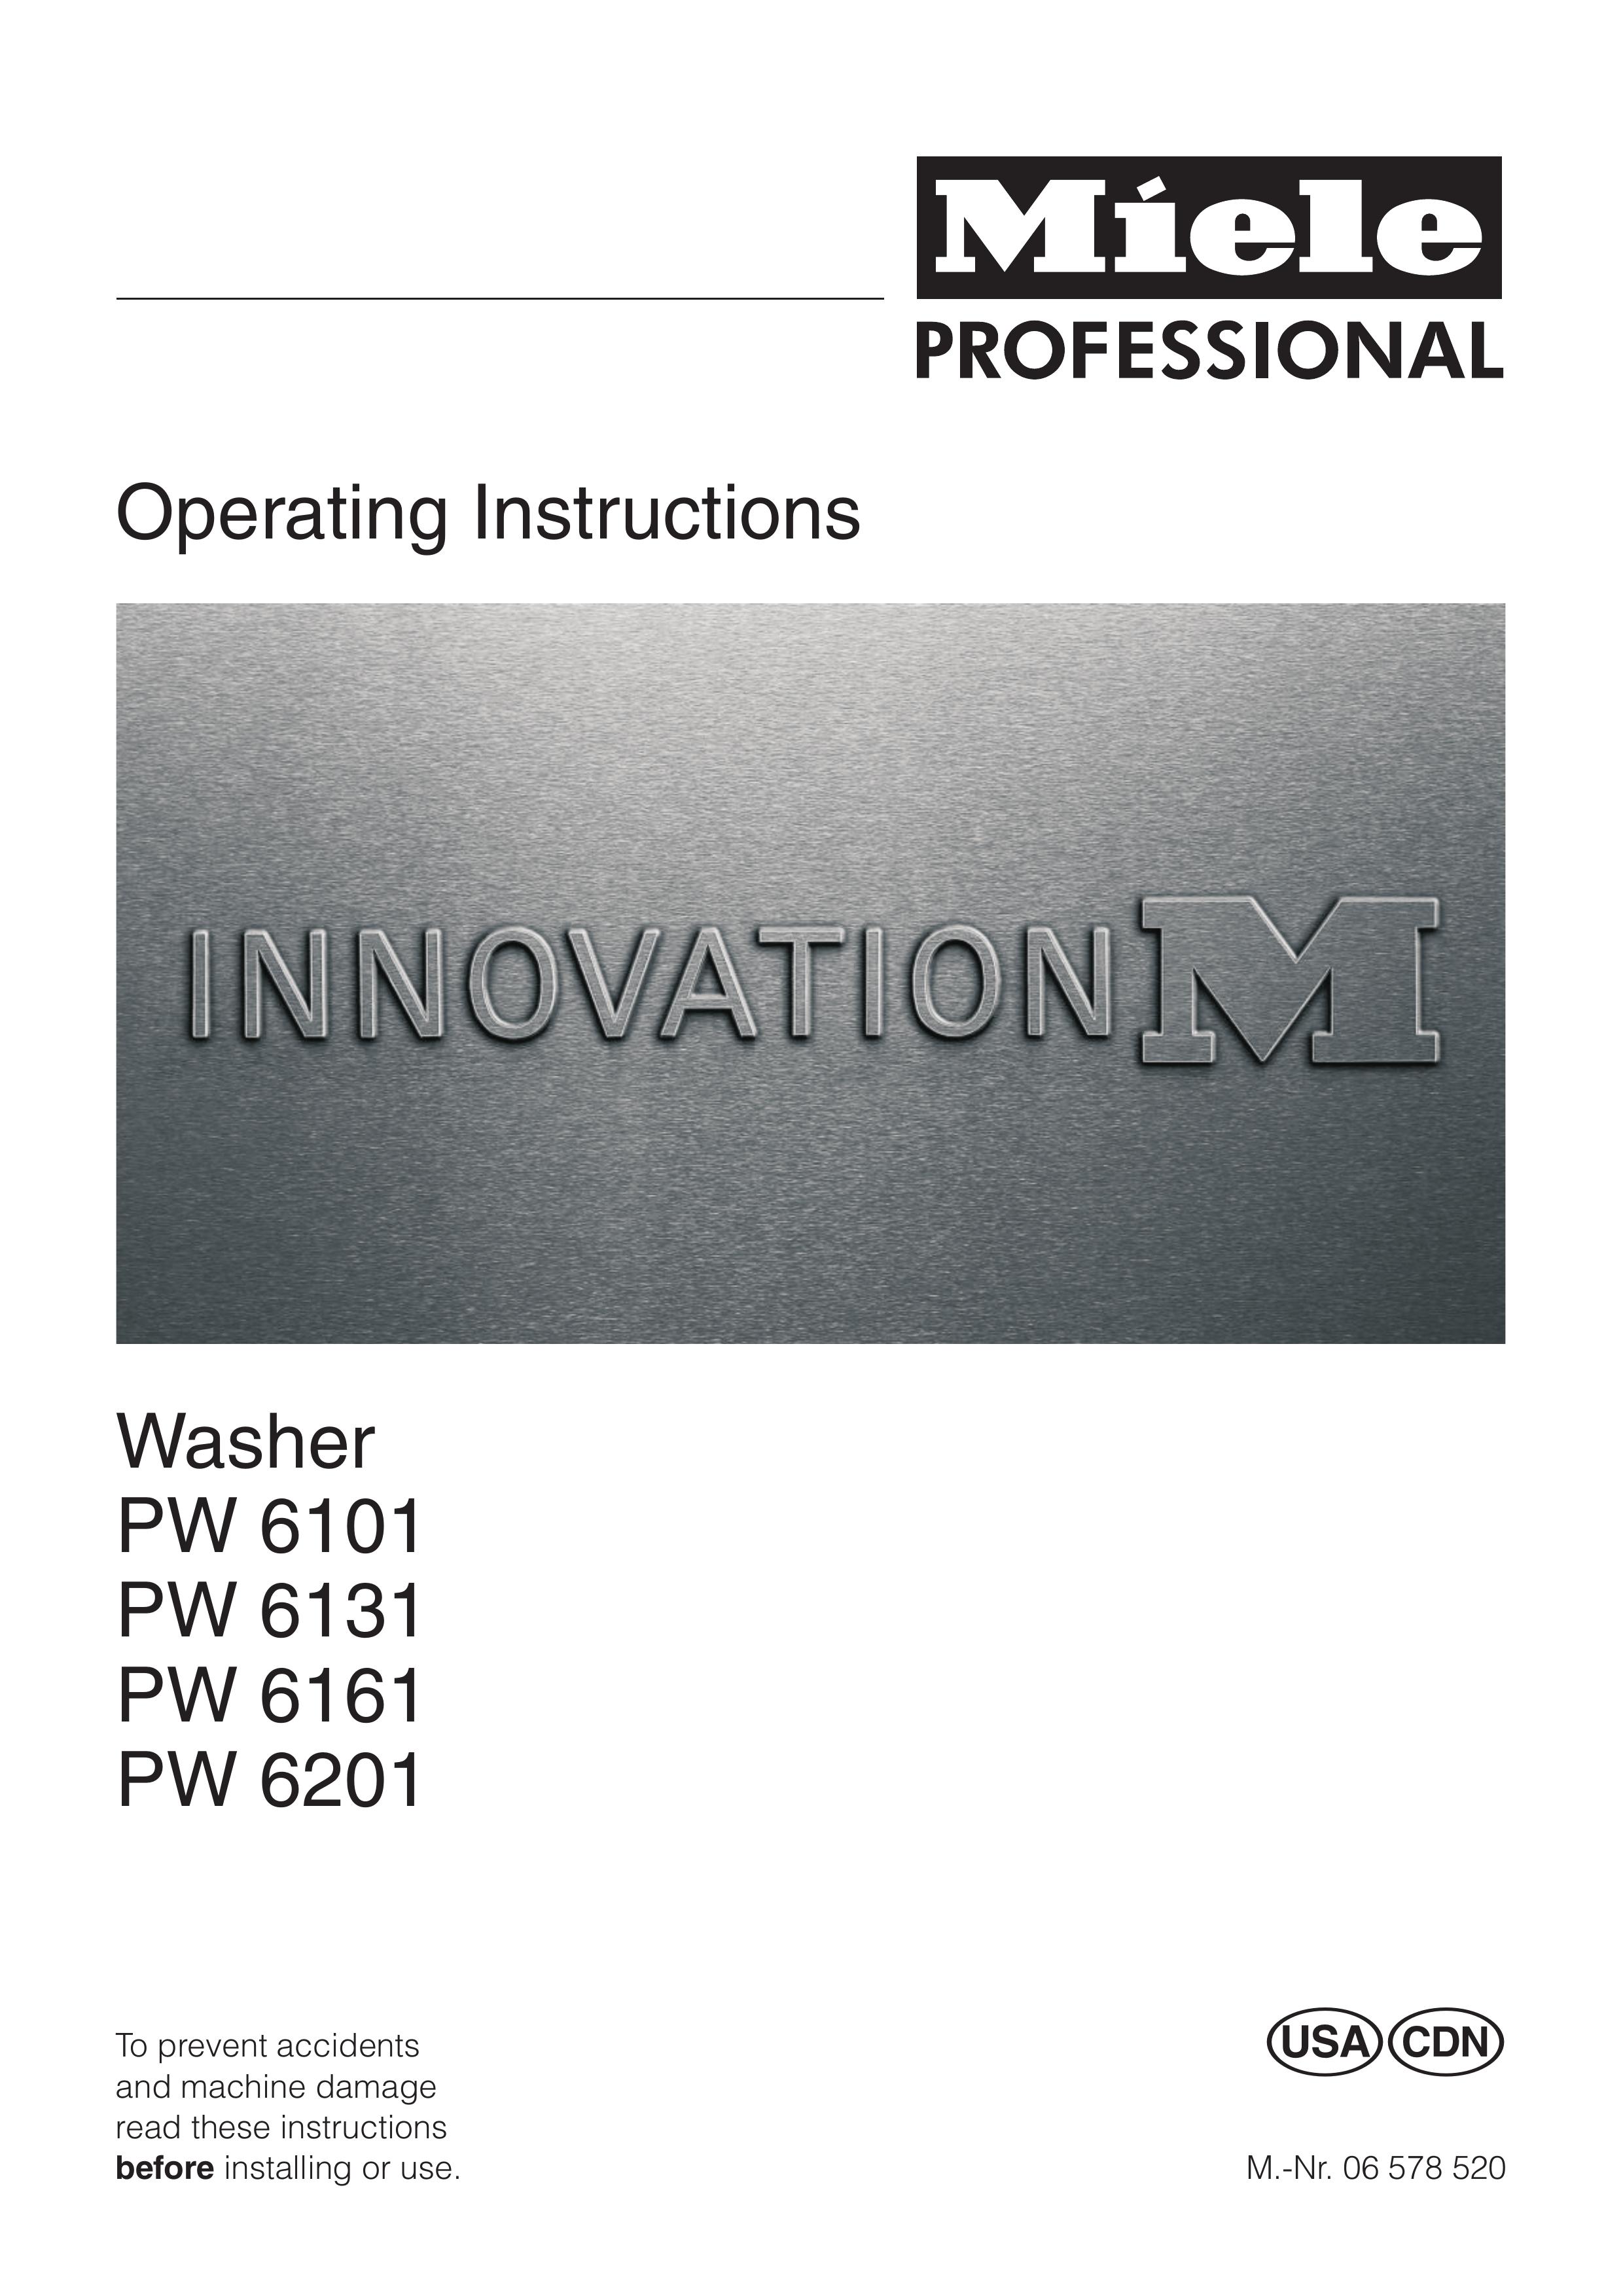 Miele PW 6201 Washer User Manual